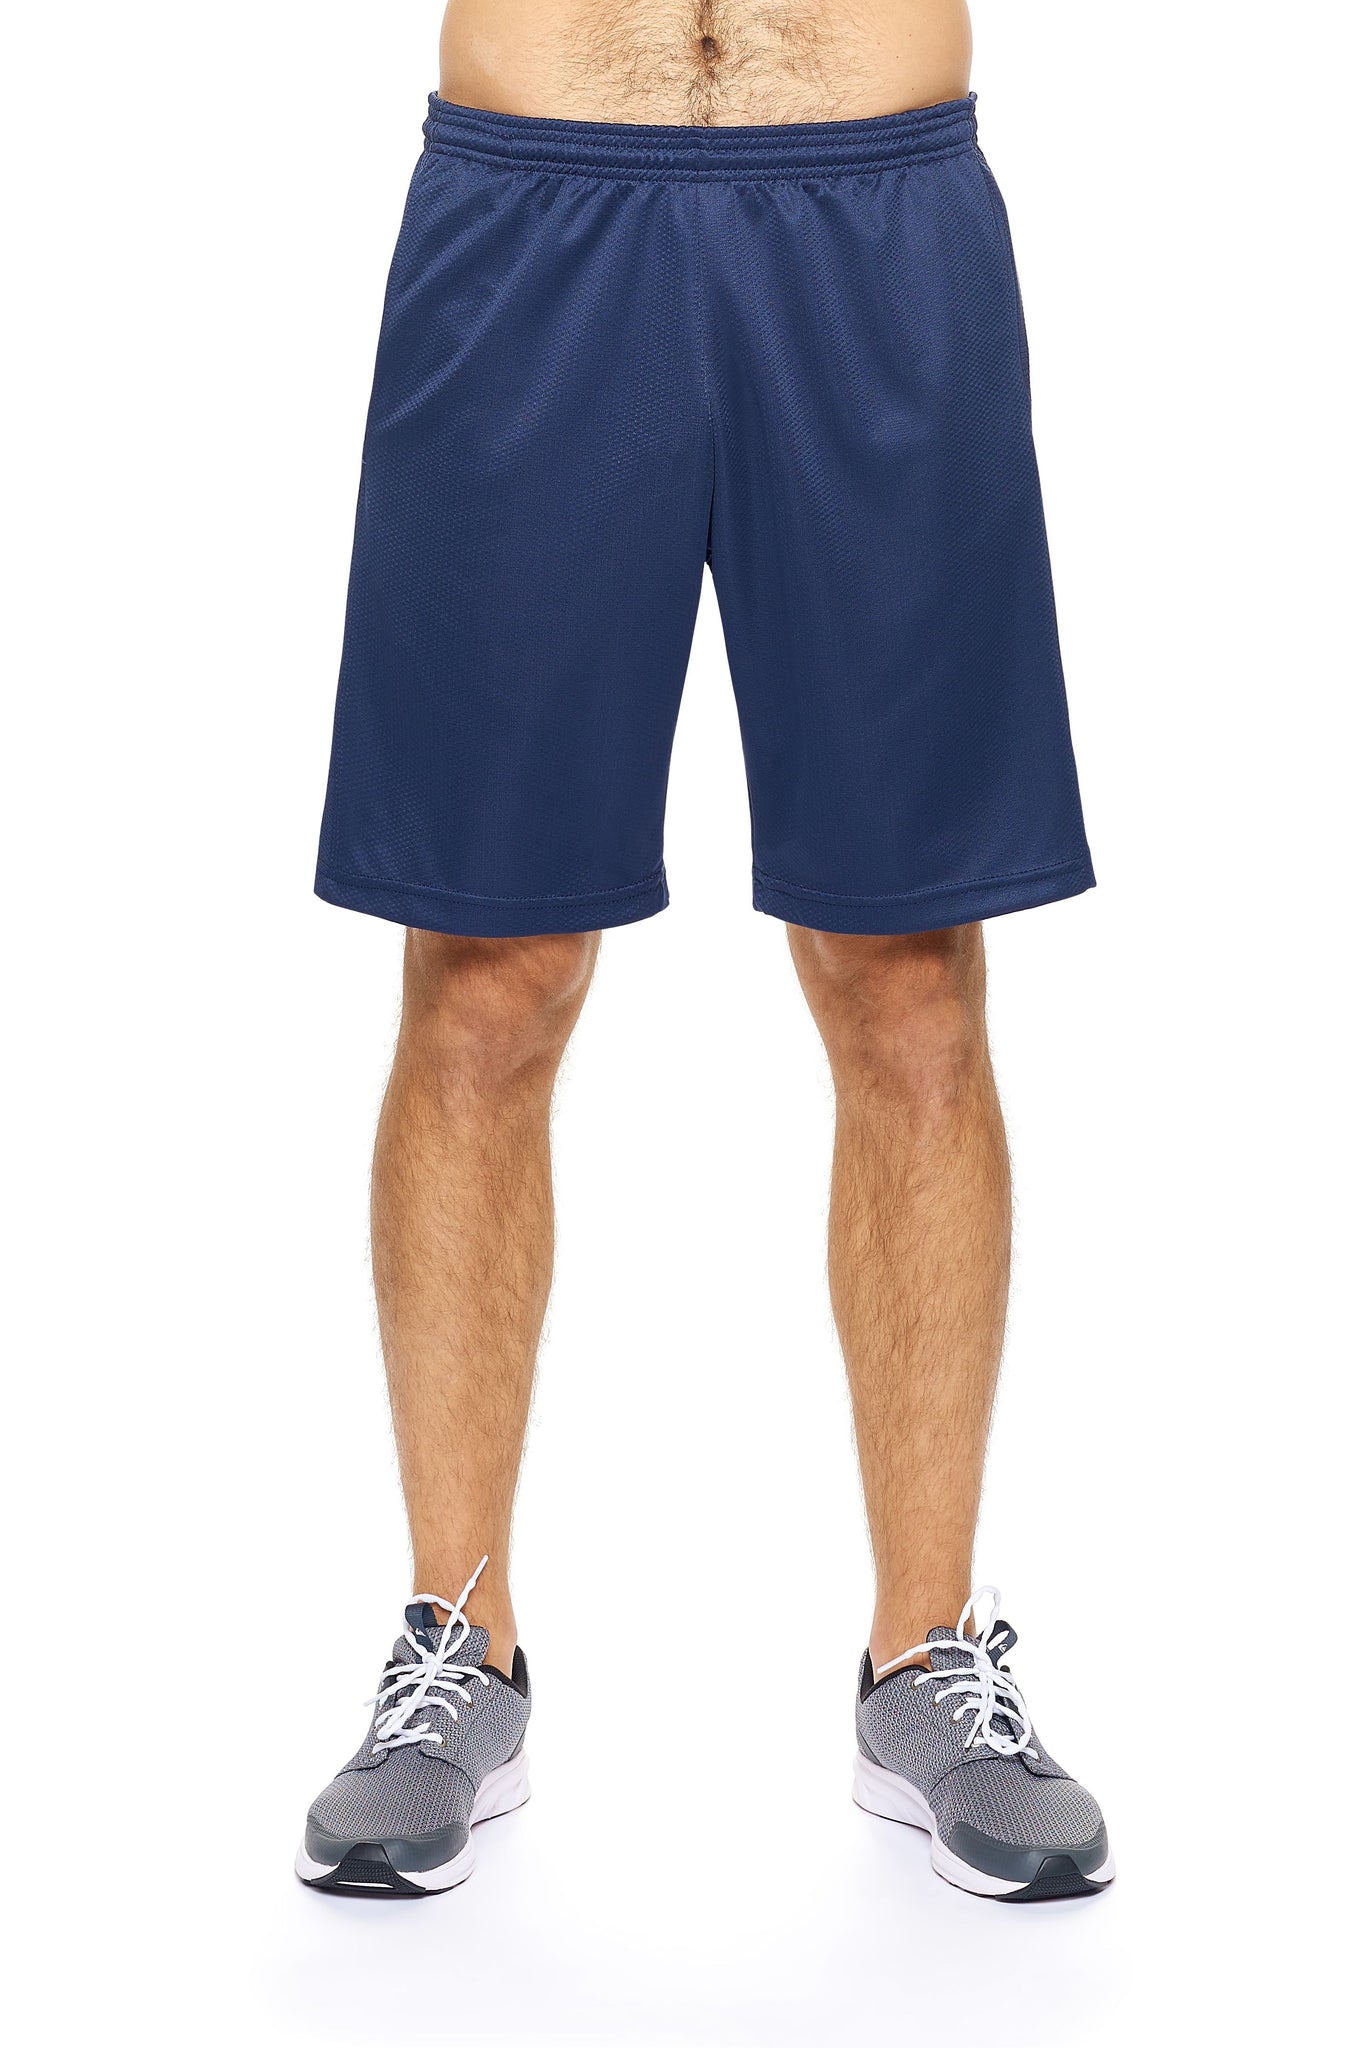 Expert Brand Wholesale Men's Lifestyle Shorts in Navy#navy